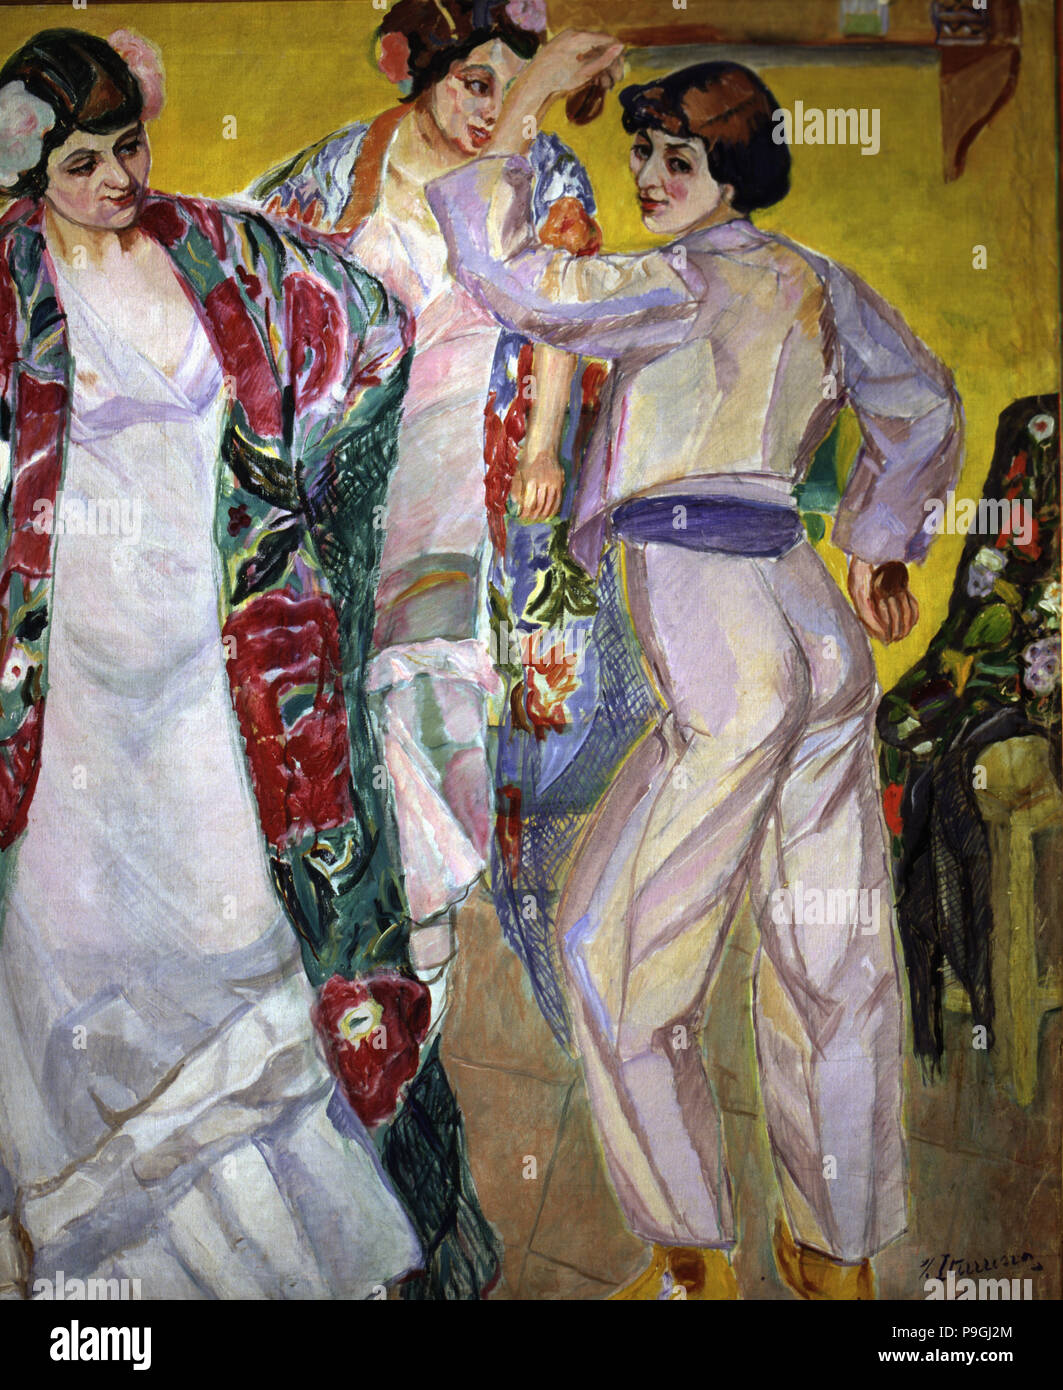 'Flamenco venue' by Francisco Iturrino, 1917. Stock Photo